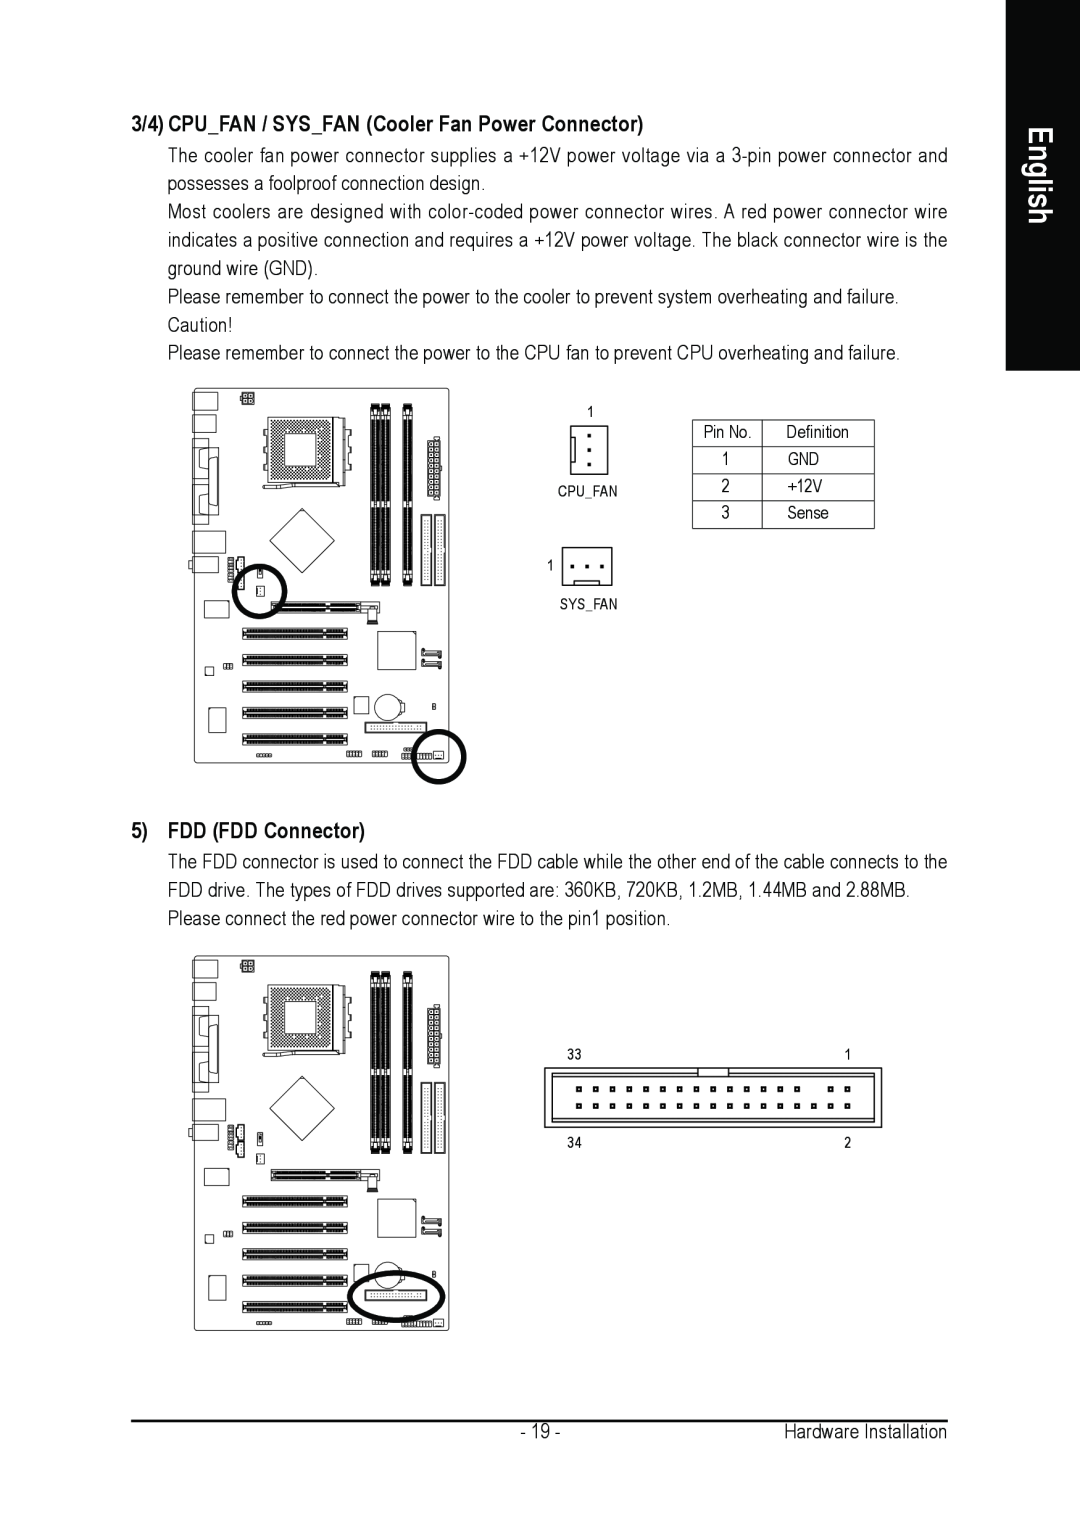 Gigabyte GA-7N400S-L user manual 3/4 CPUFAN / SYSFAN Cooler Fan Power Connector, FDD FDD Connector, English 